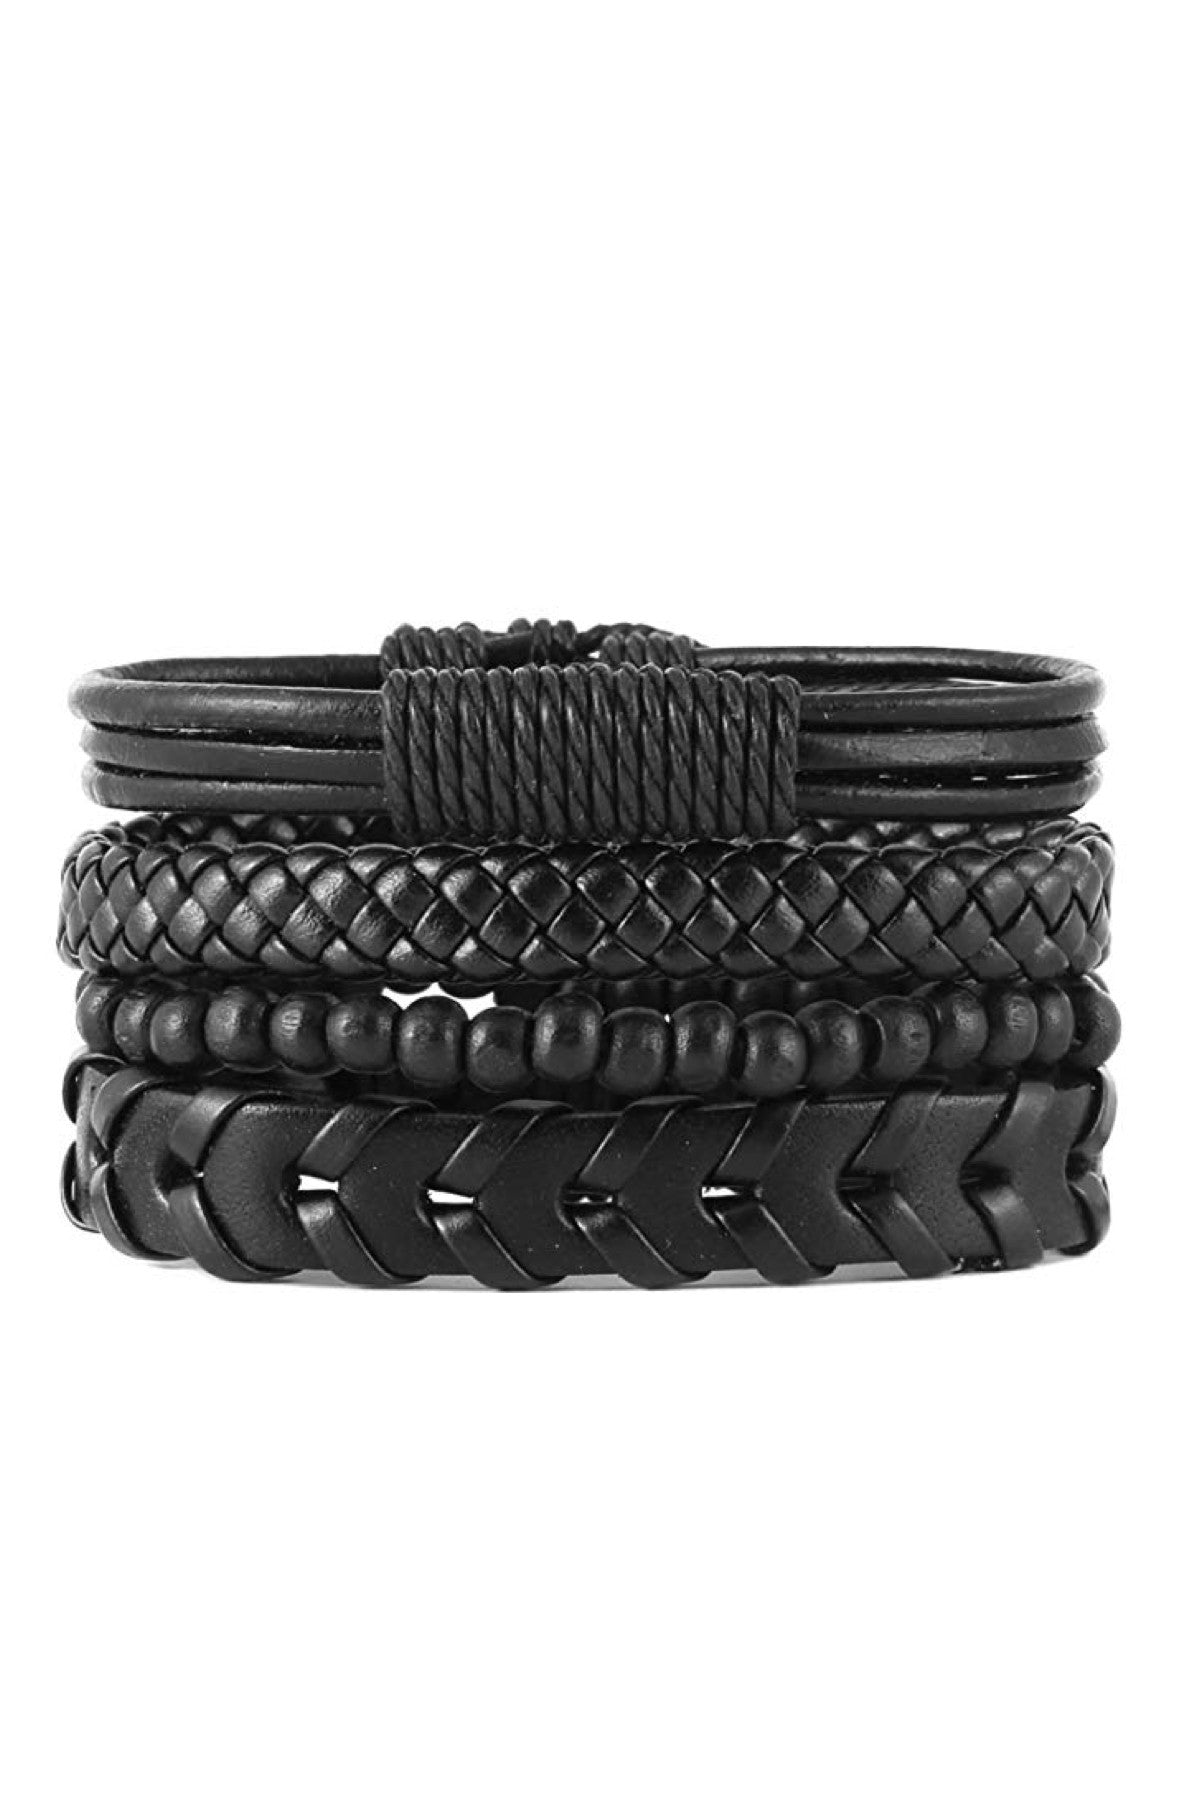 Set of 4 Black Leather Woven Bracelets